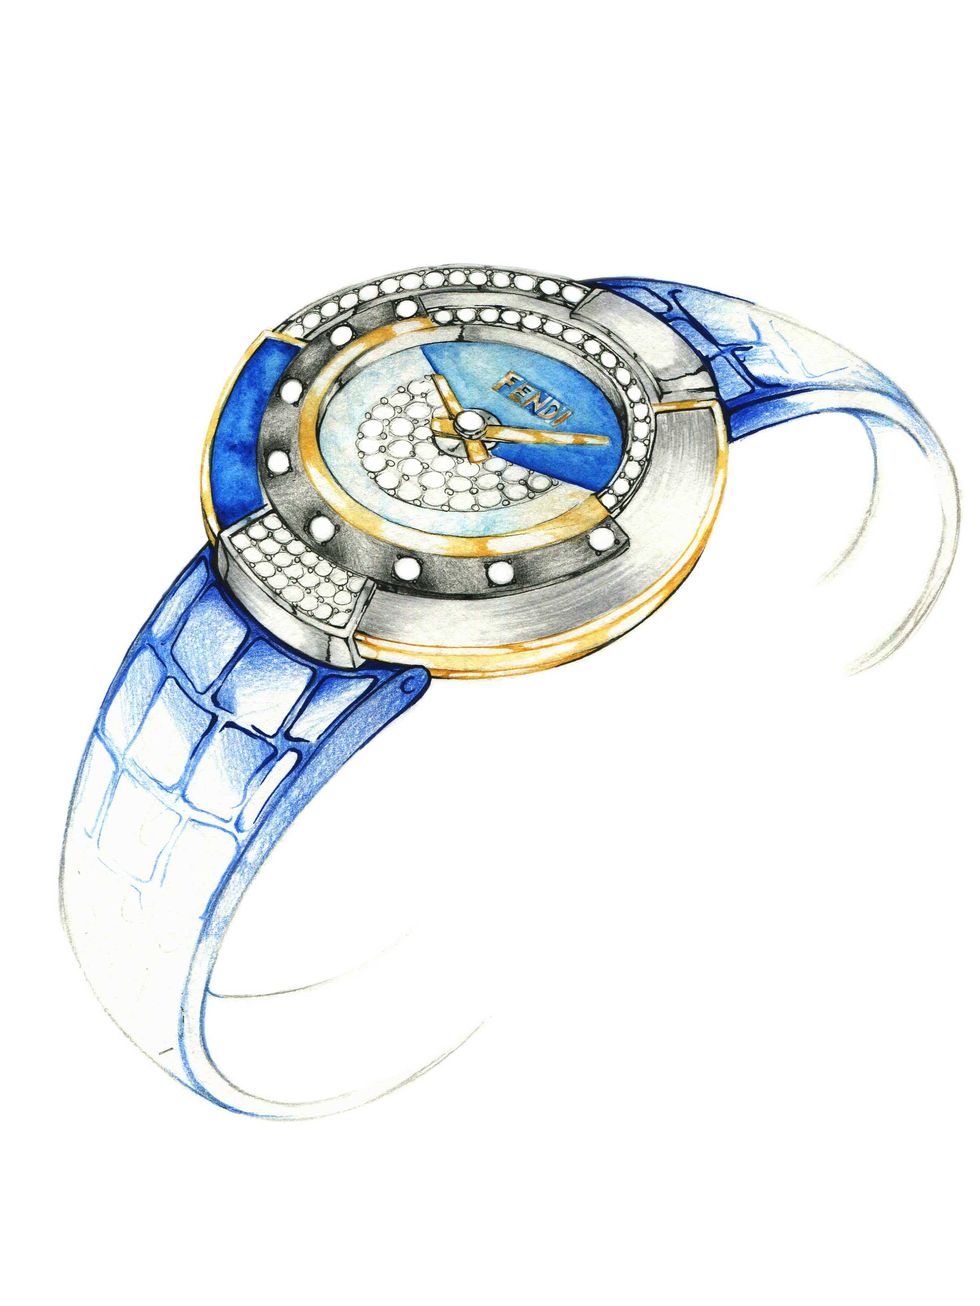 Blue, Azure, Electric blue, Cobalt blue, Circle, Analog watch, Drawing, Measuring instrument, Number, 